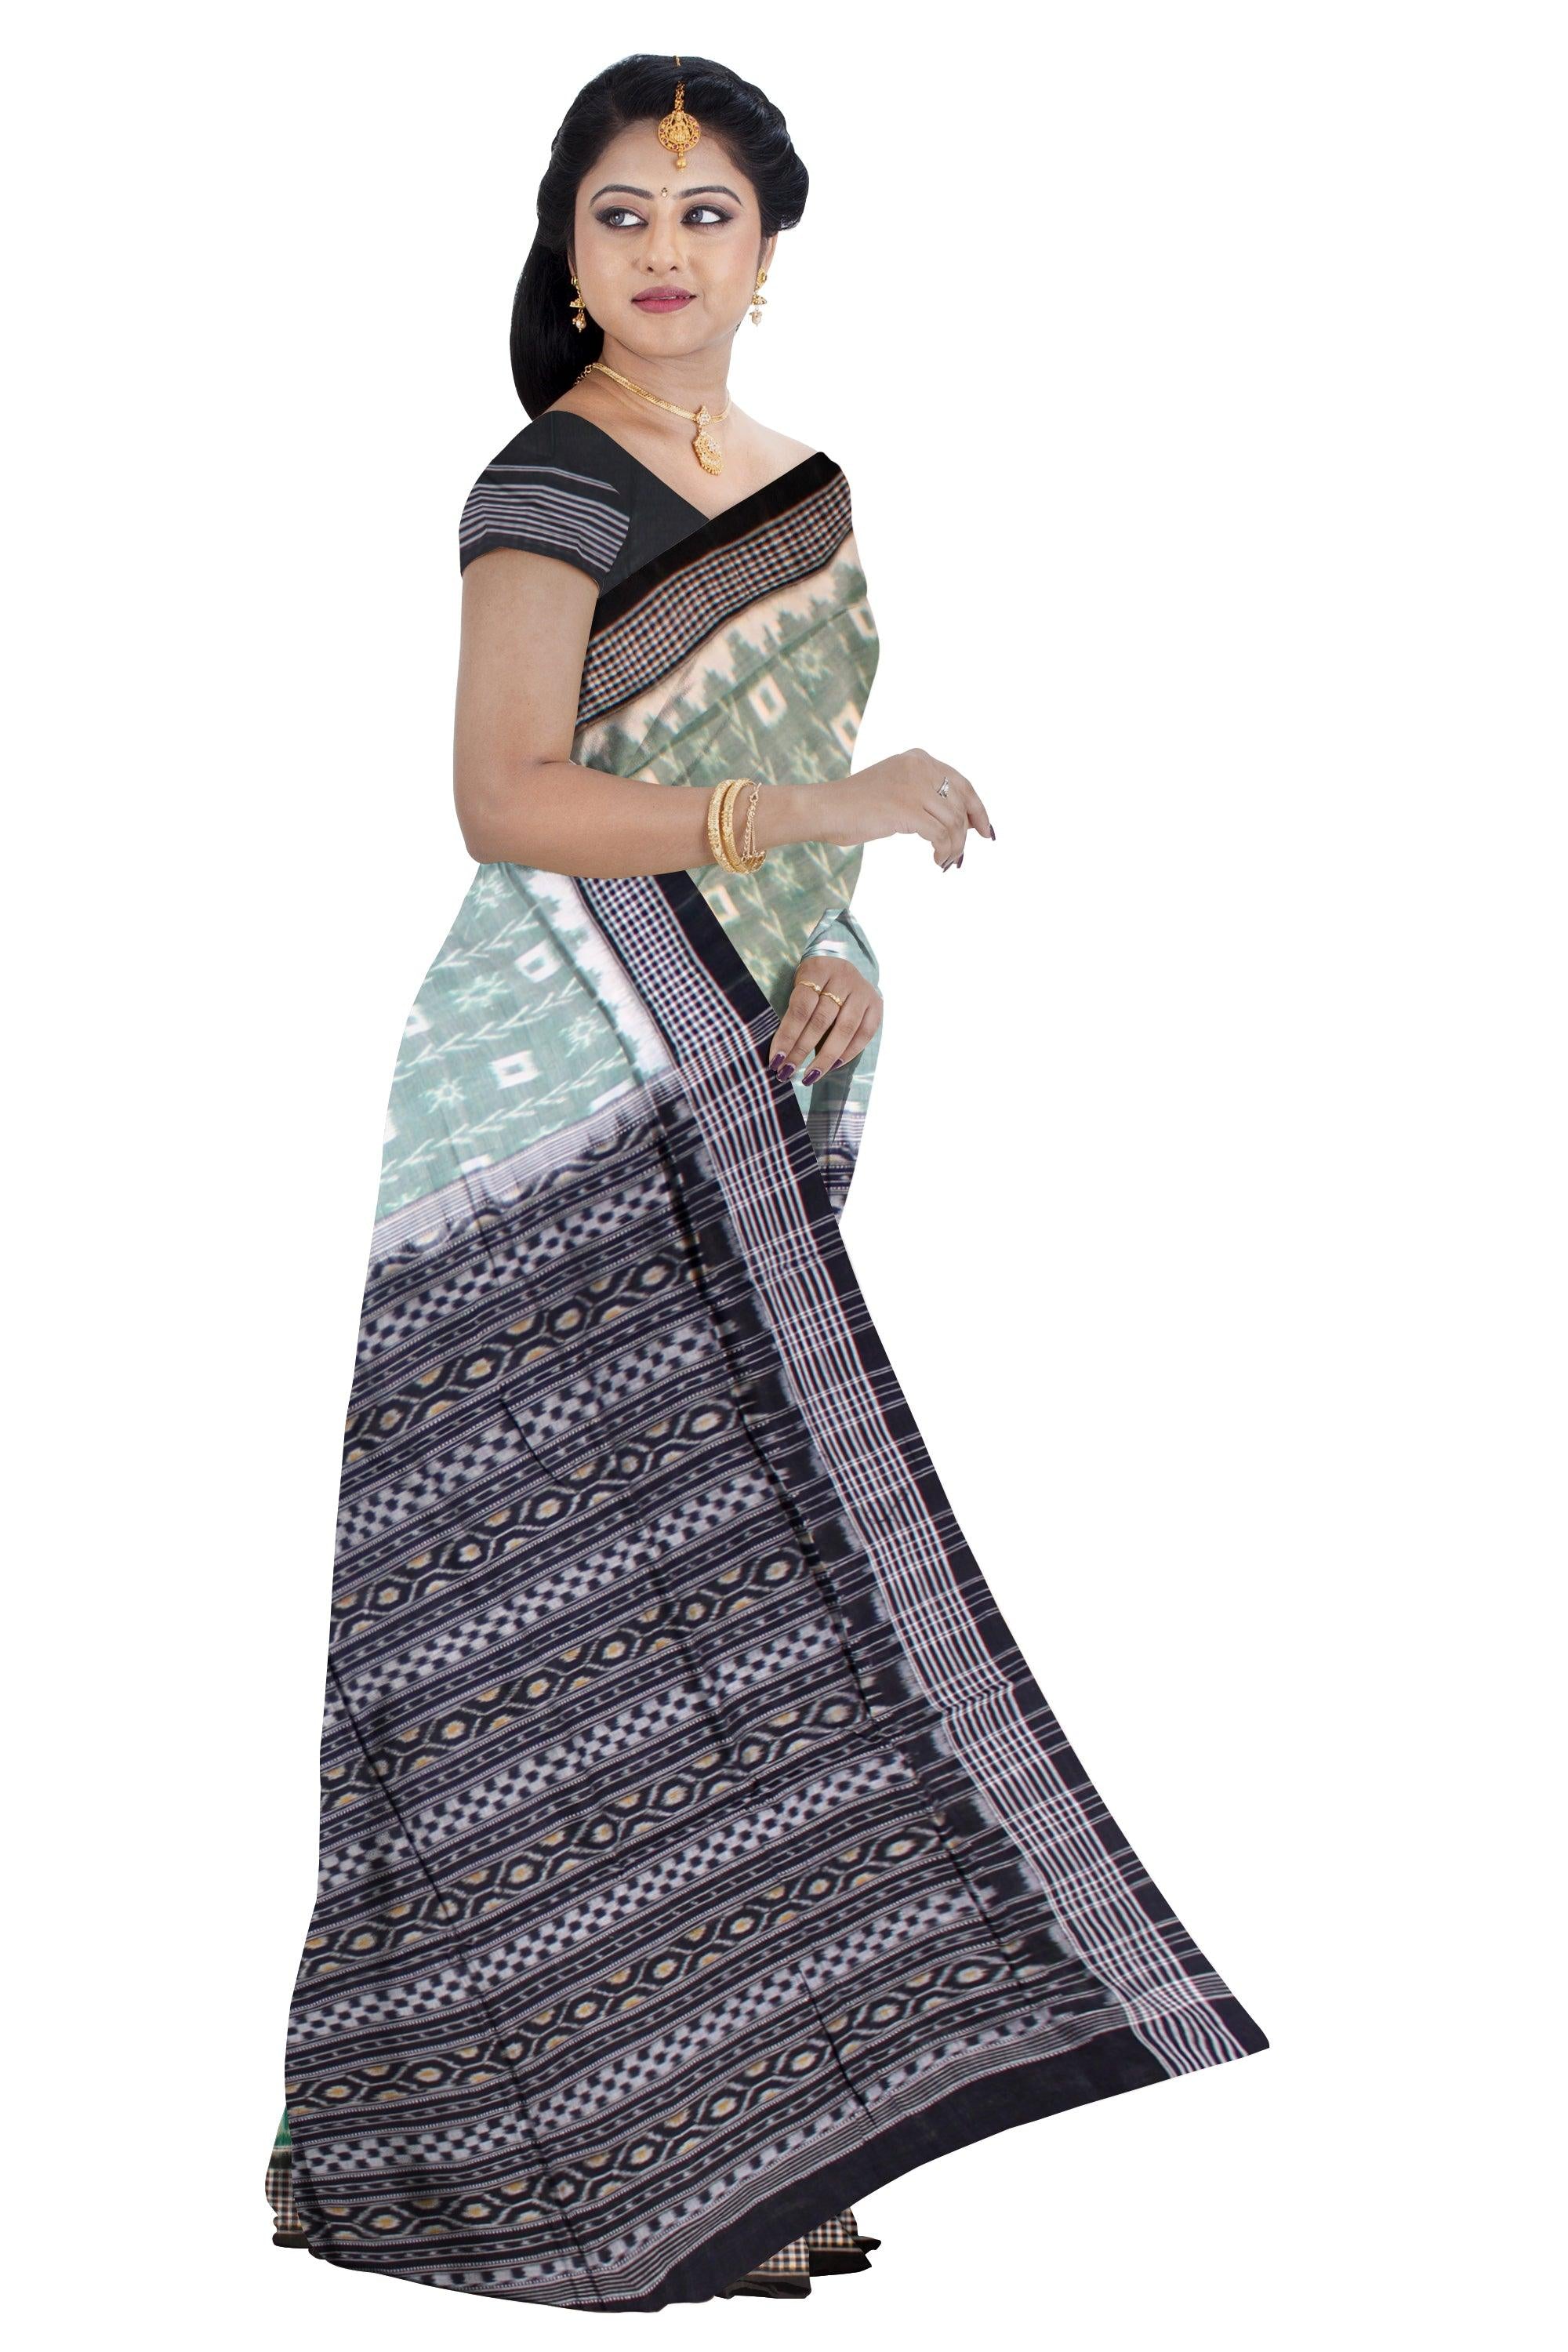 Grey and dark green color sonepur cotton saree, with blouse piece. - Koshali Arts & Crafts Enterprise